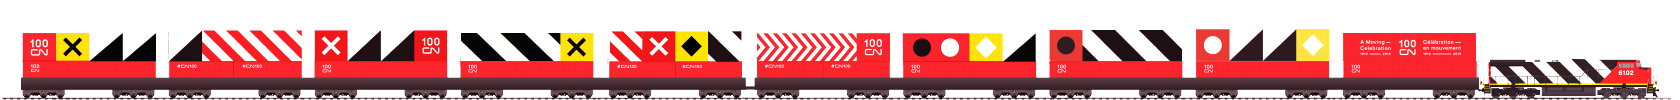 CN 100 Train